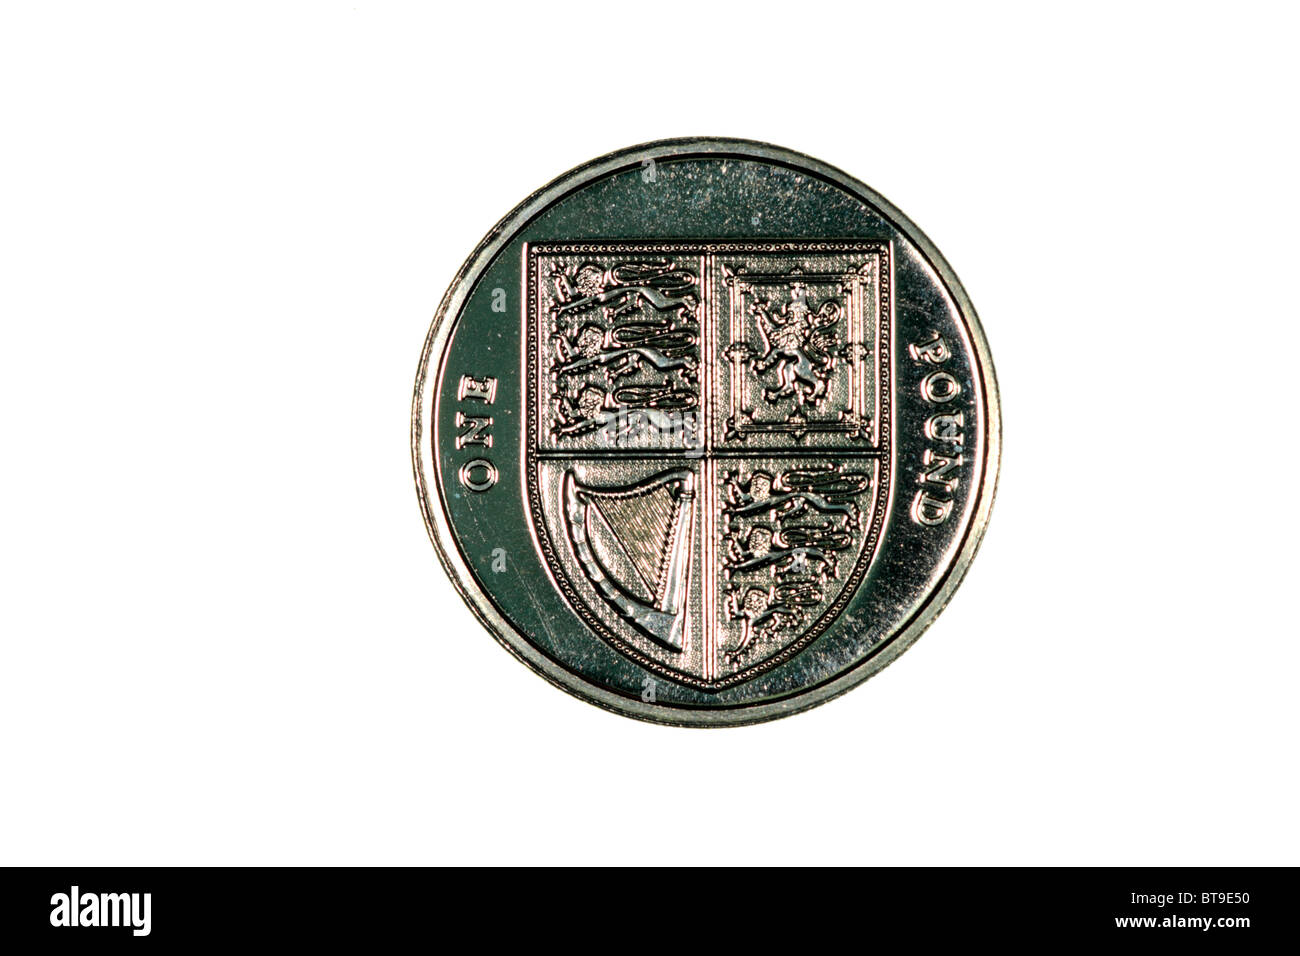 Pound coin design Stock Photo